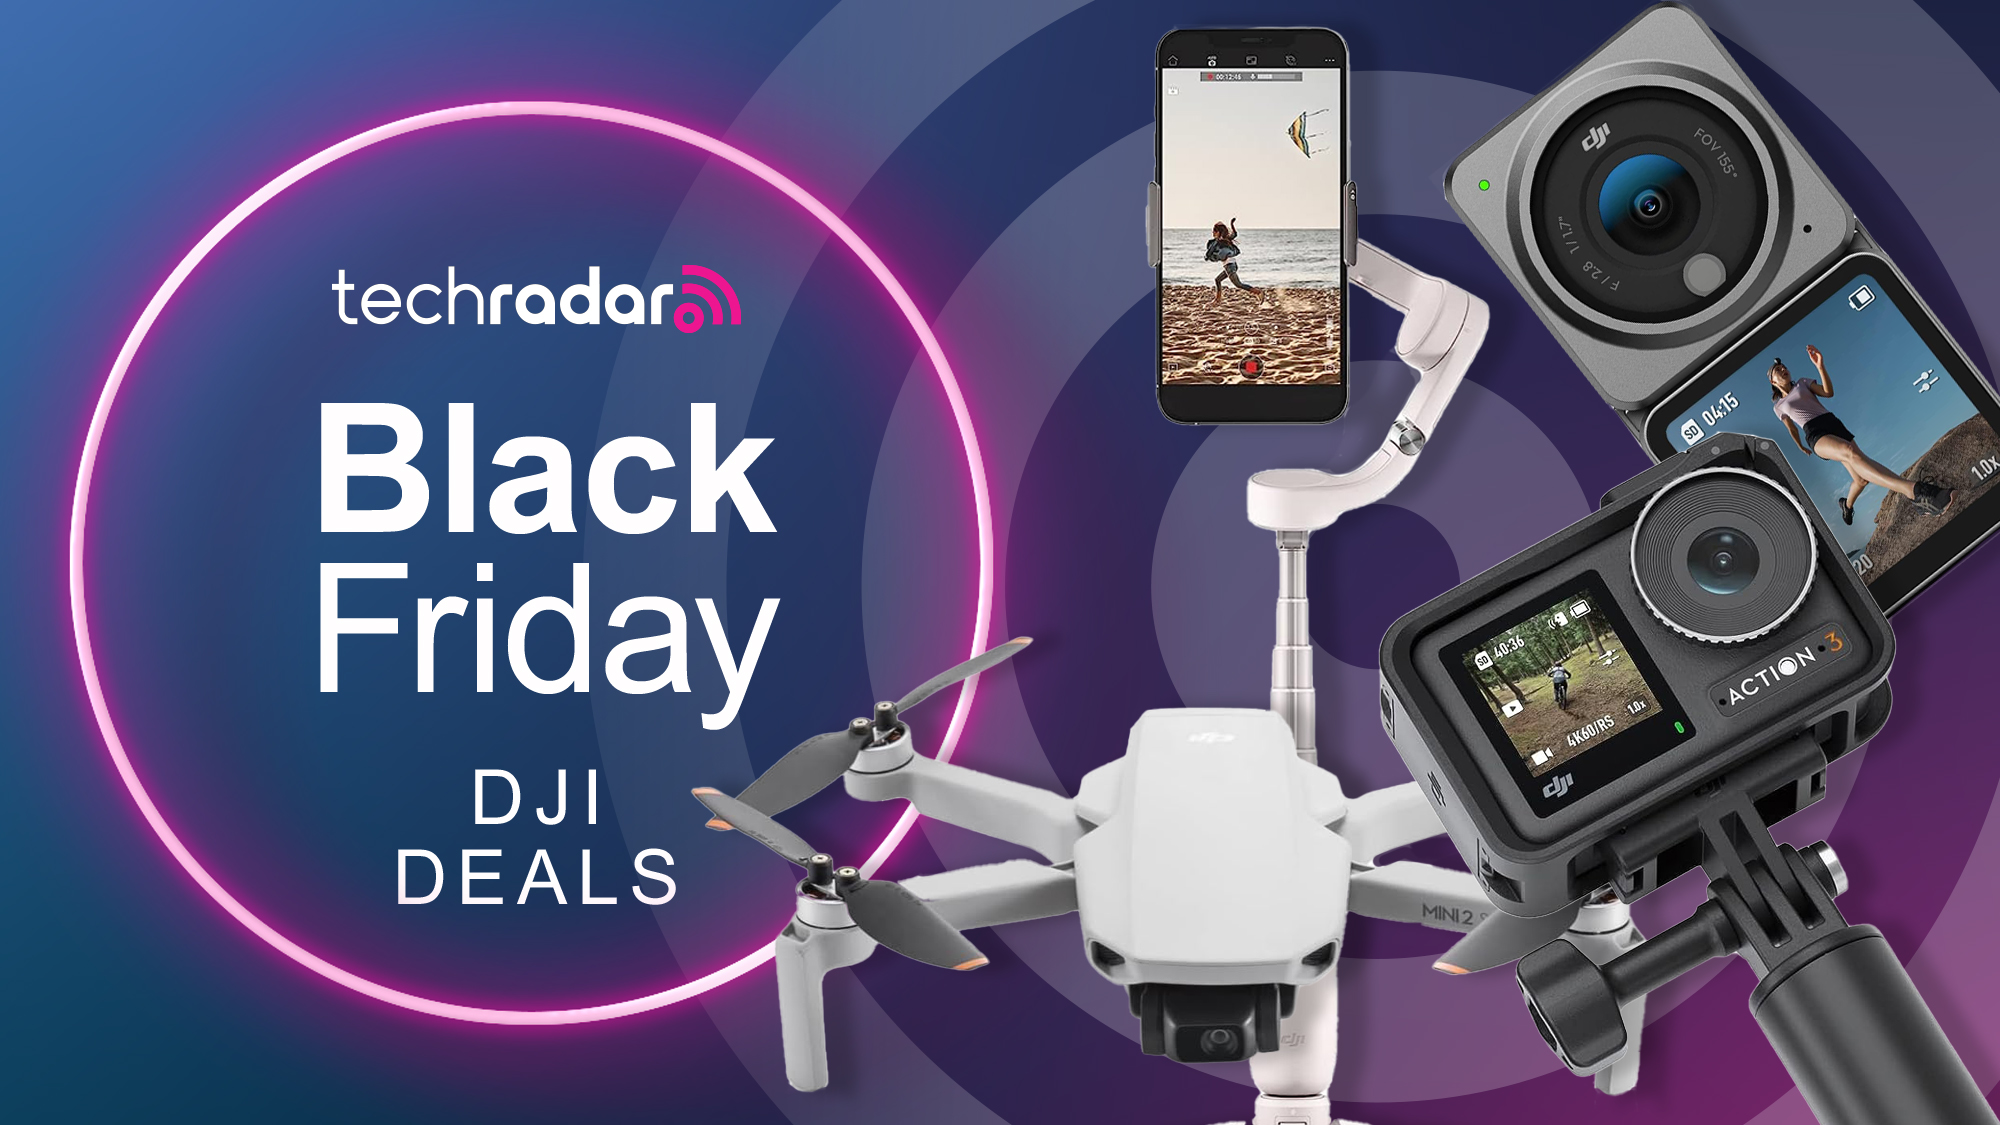 Mini 3 (DJI RC) Black Friday deal now live; save 12%